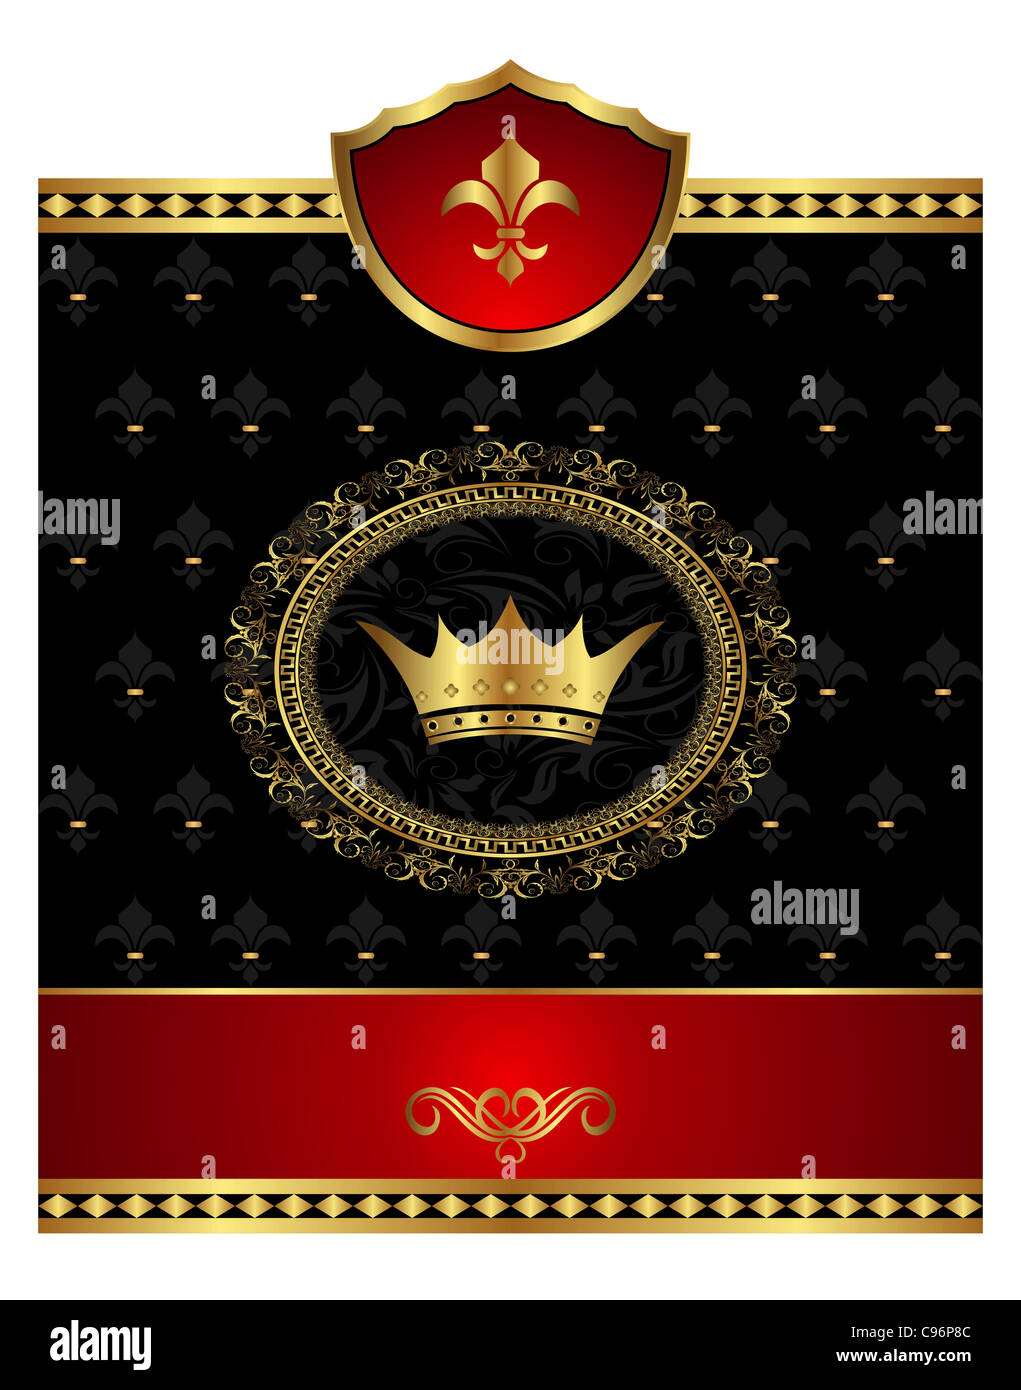 Illustration heraldic vintage frame for design packing - vector Stock Photo